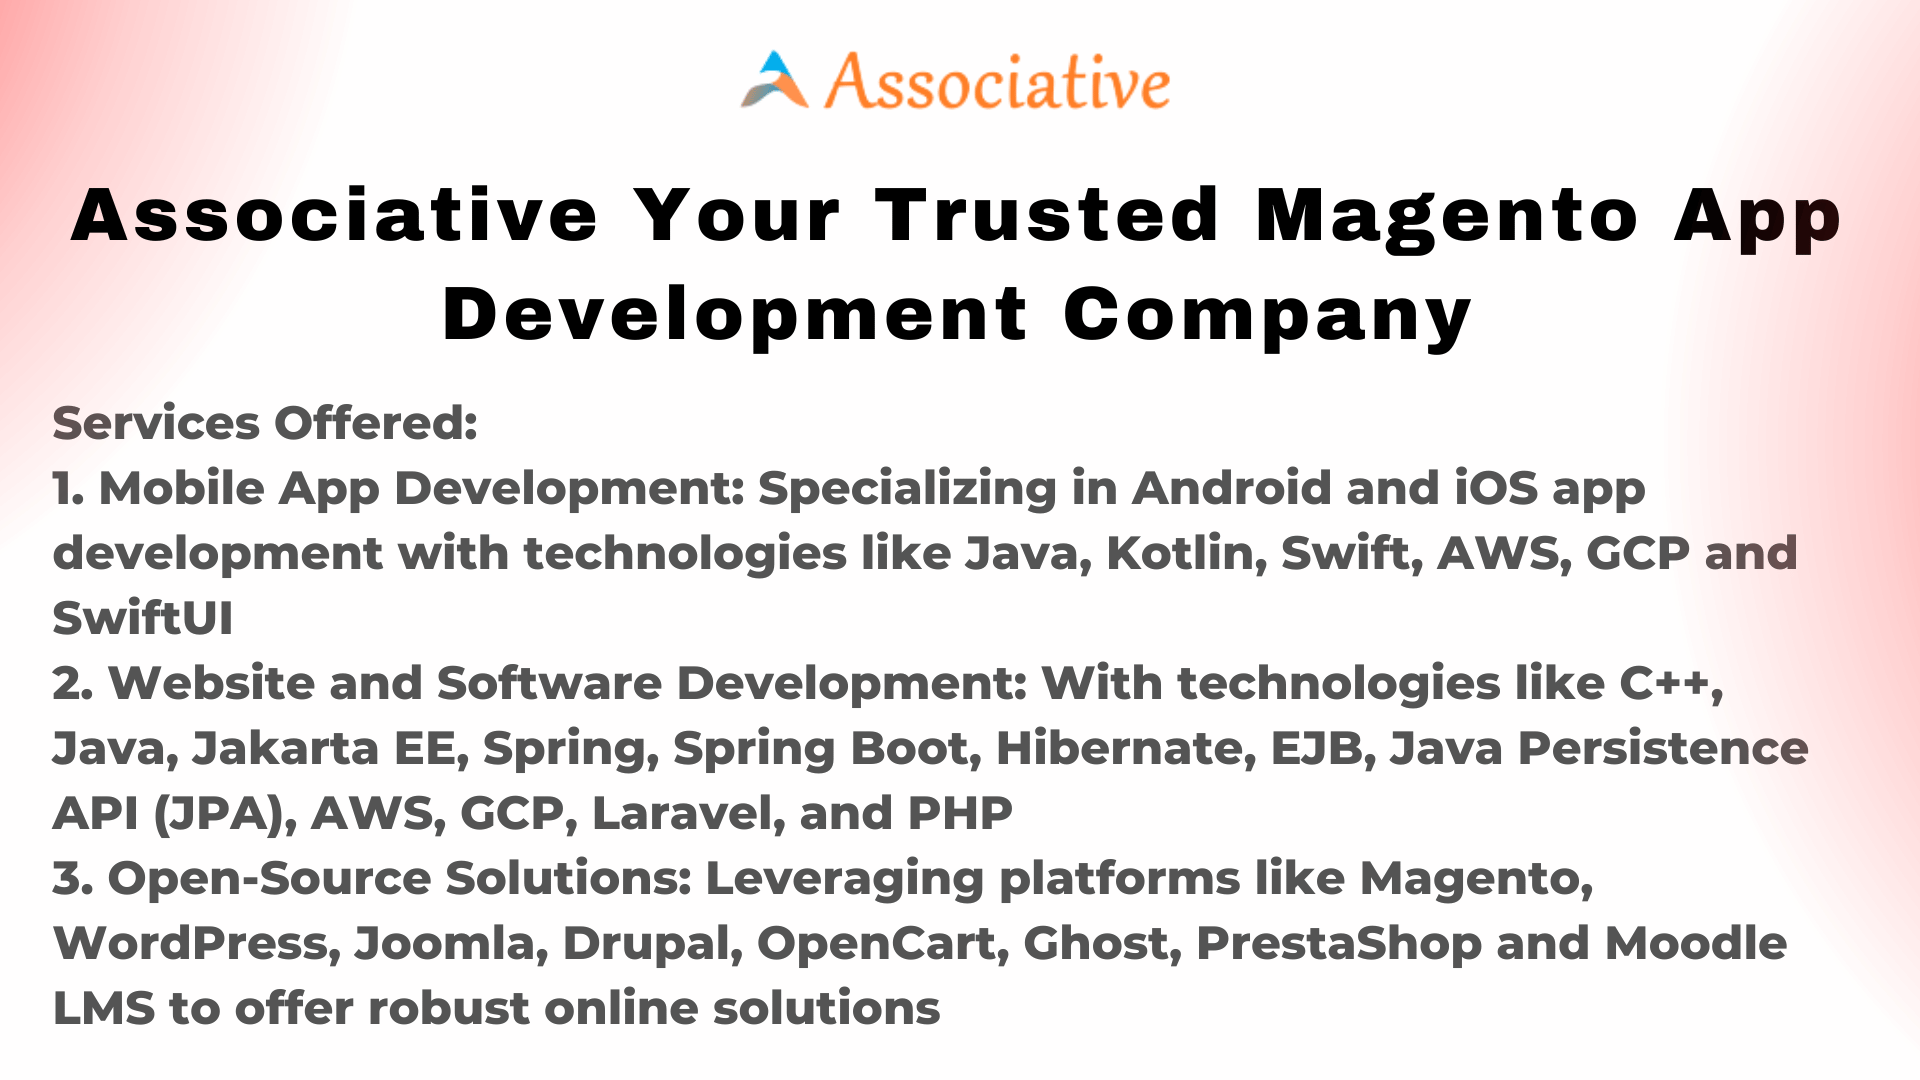 Associative Your Trusted Magento App Development Company